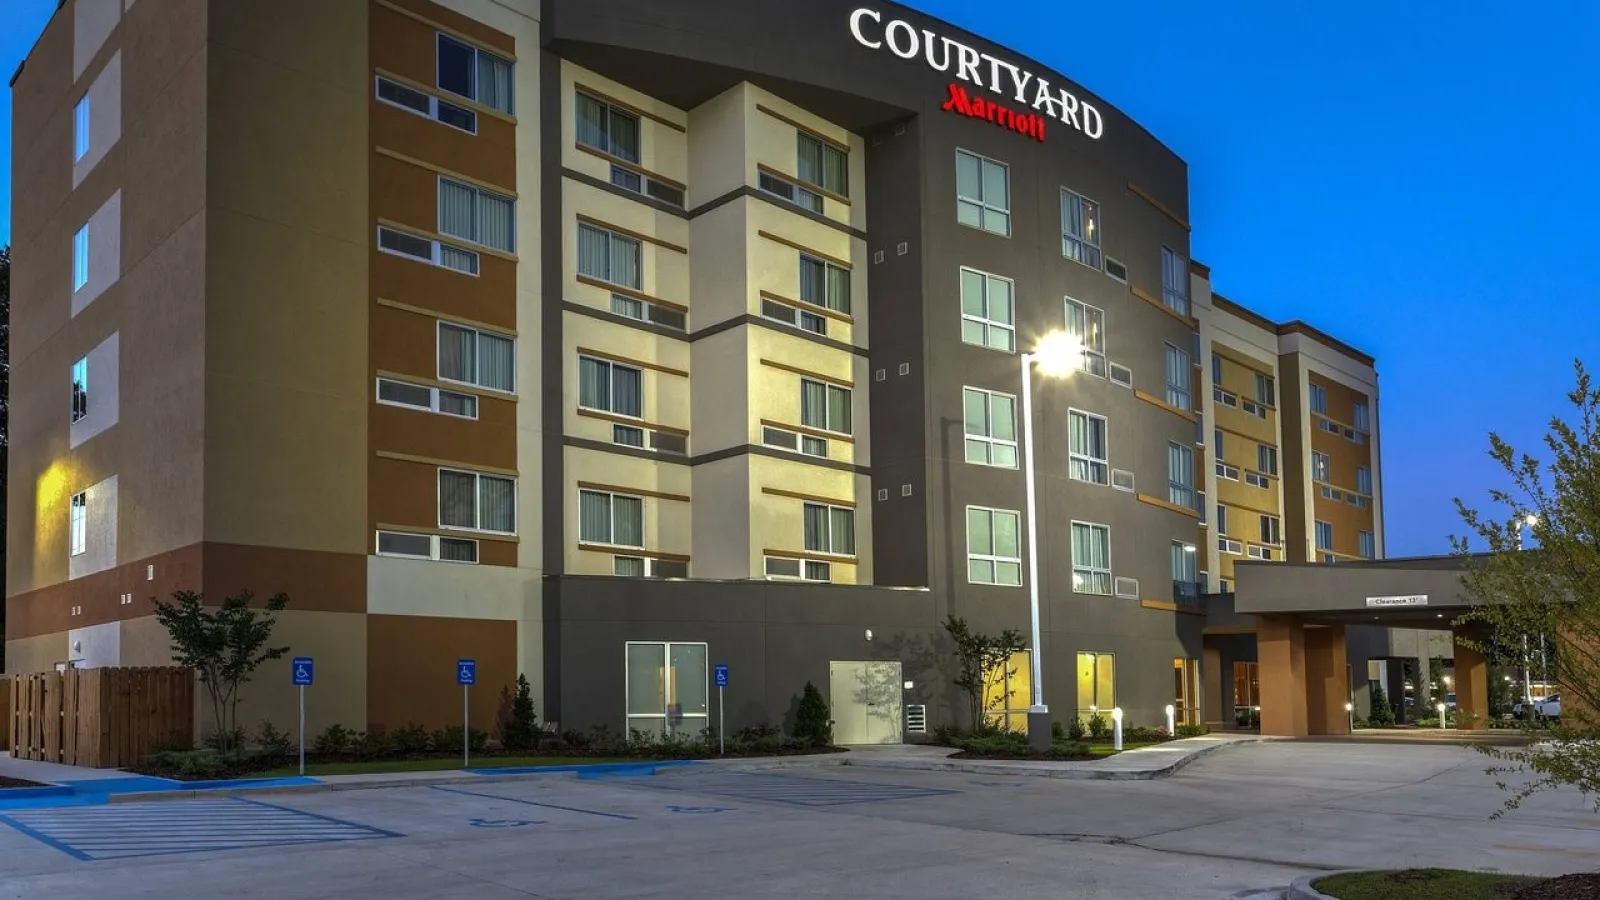 Courtyardby Marriott